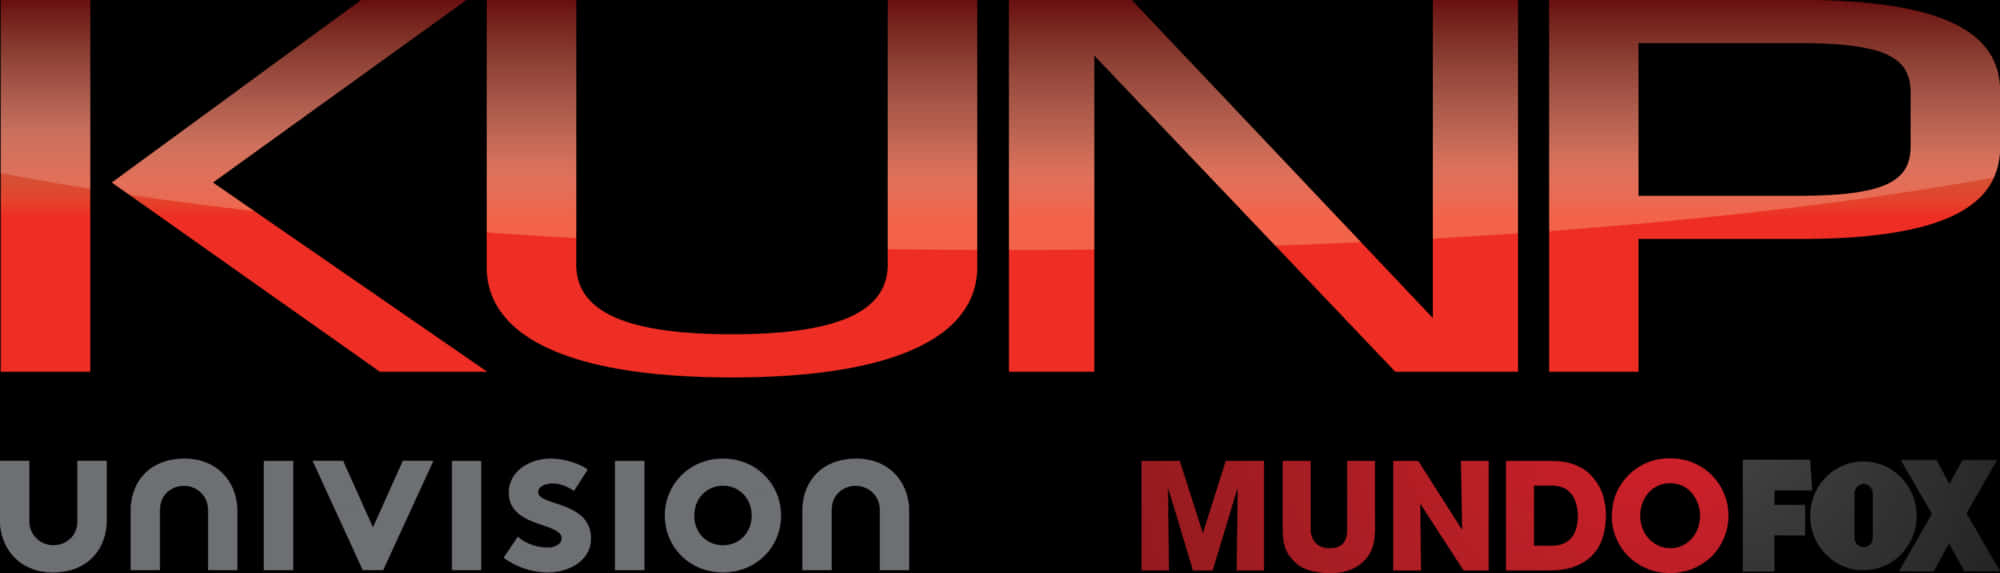 Univision Mundo Fox Logo Red Gradient Background PNG